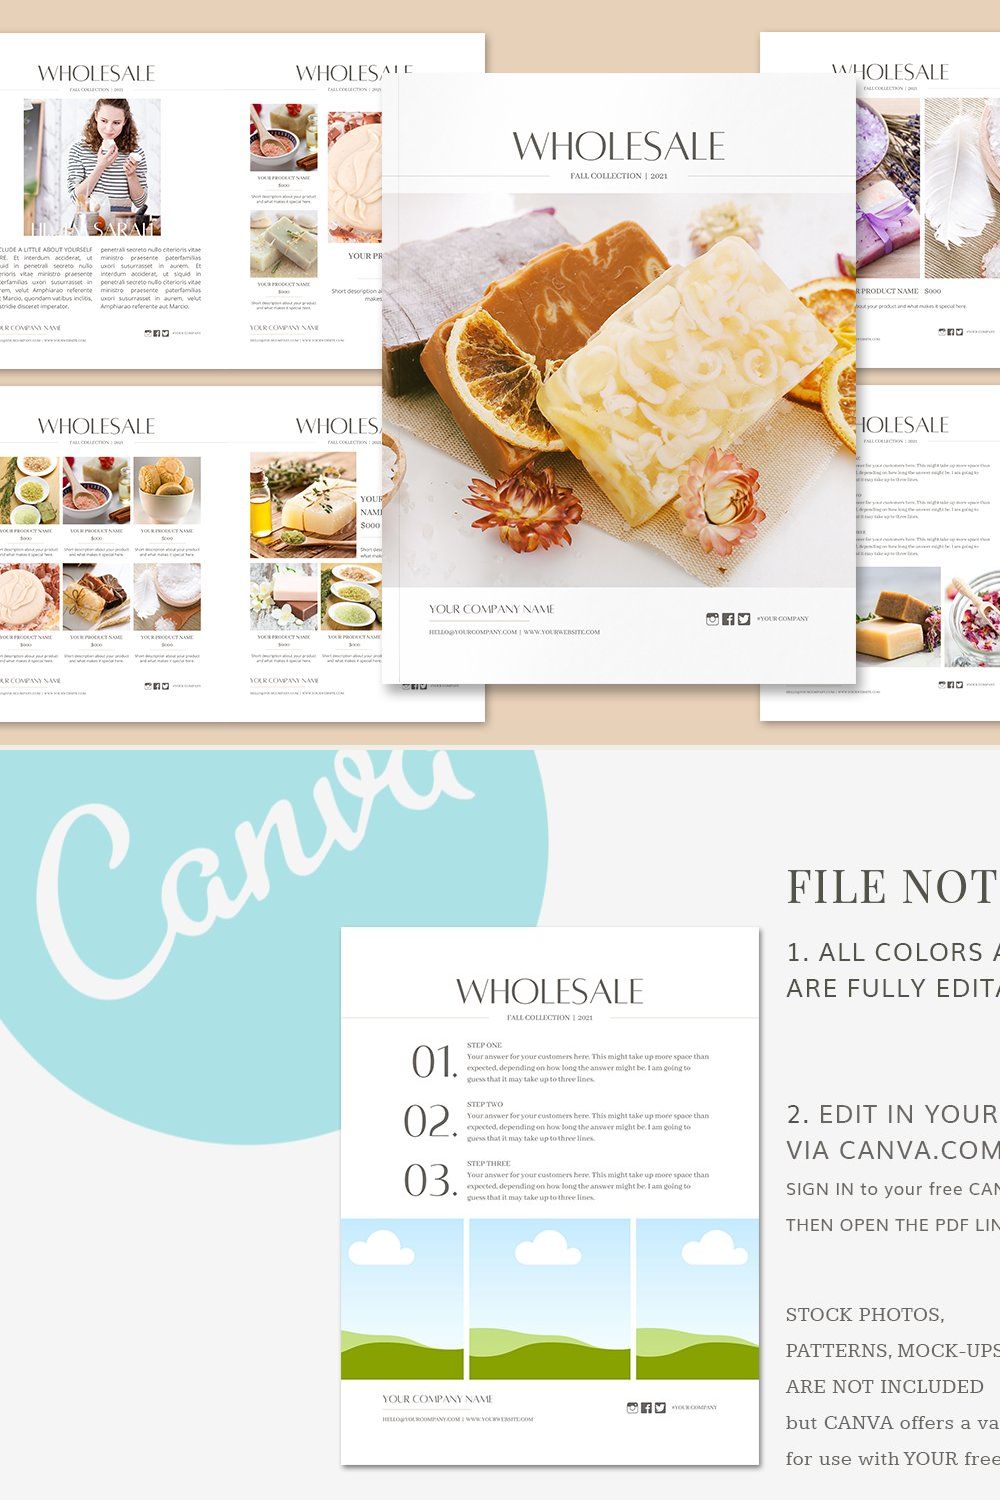 CANVA Wholesale Catalog Template pinterest preview image.